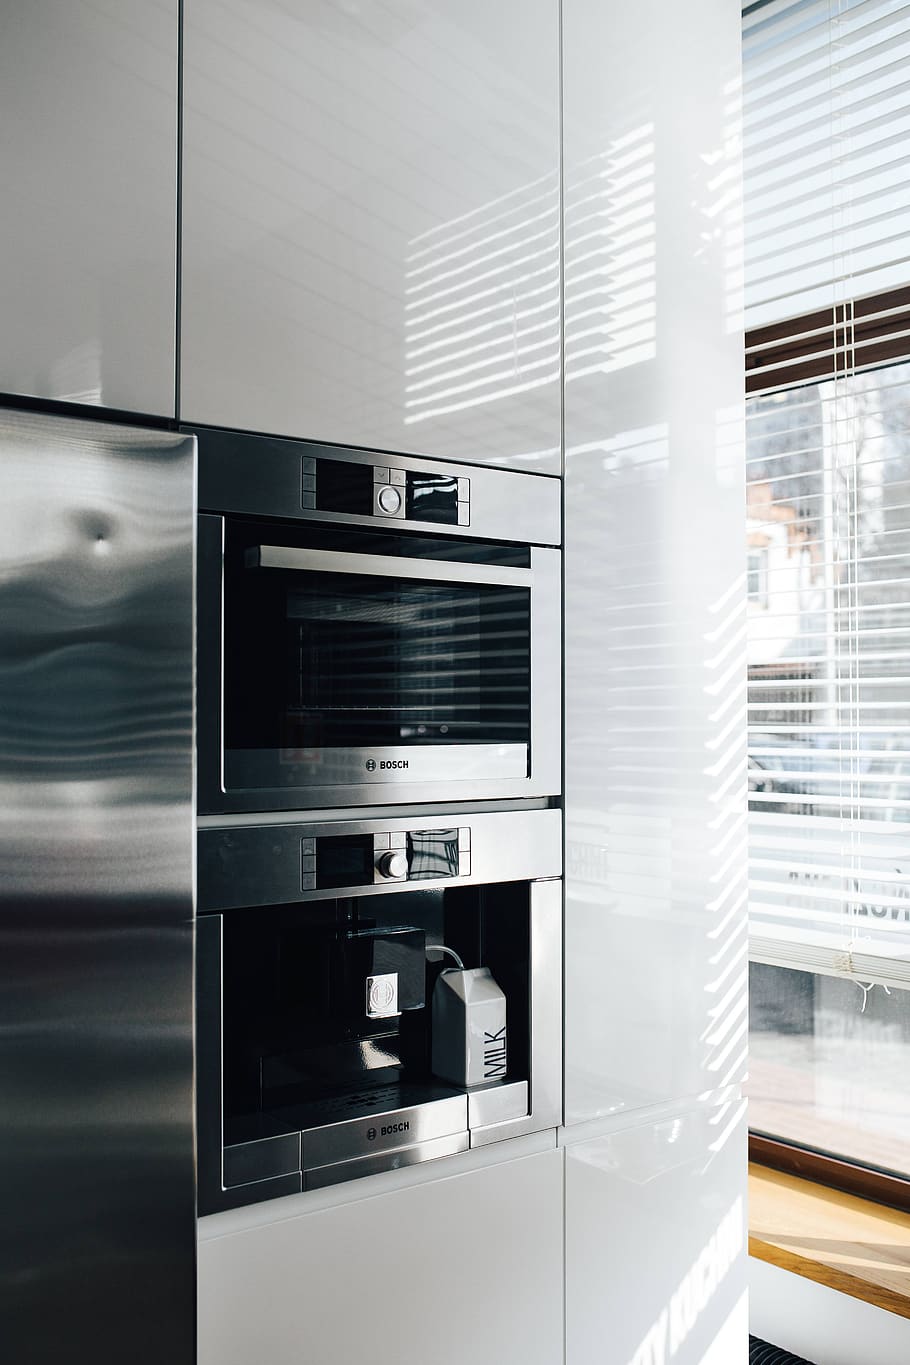 cinza, branco, moderno, contemporâneo, estilo, design, cozinha, metálico, forno, geladeira